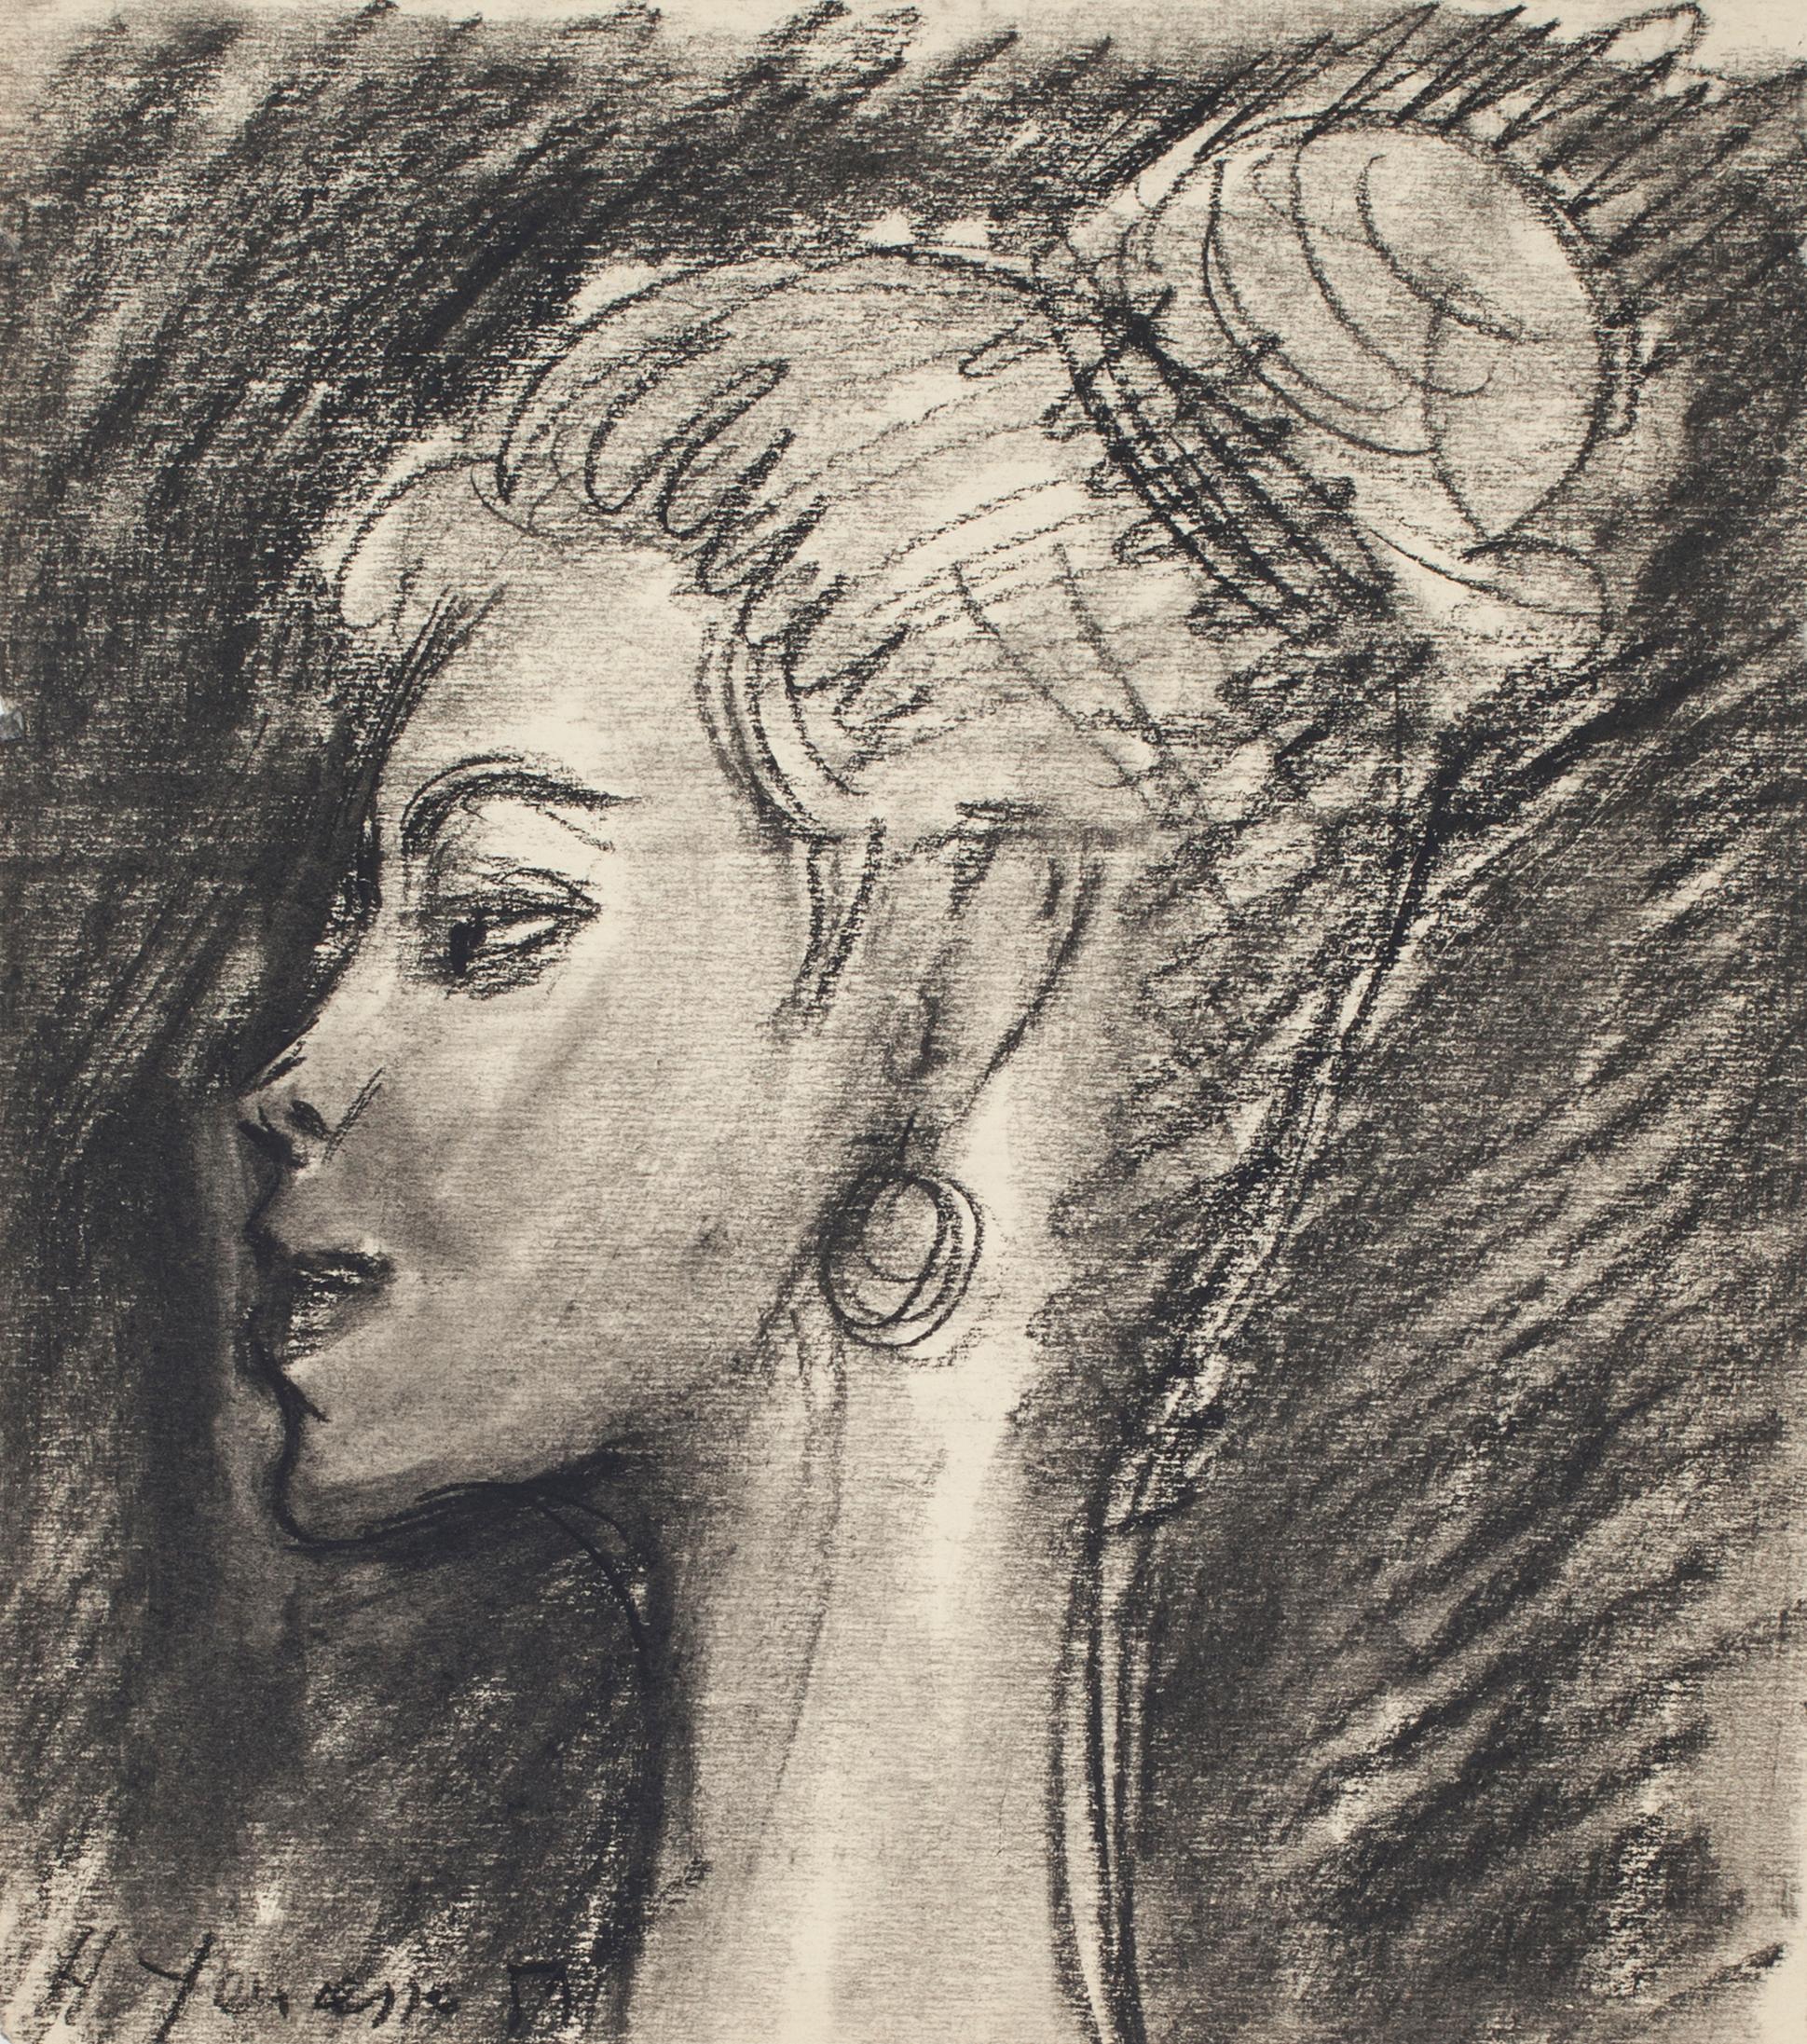 Hubert Yencesse Figurative Art - Portrait - Pencil and Charcoal Drawing by H. Yencesse - 1950s